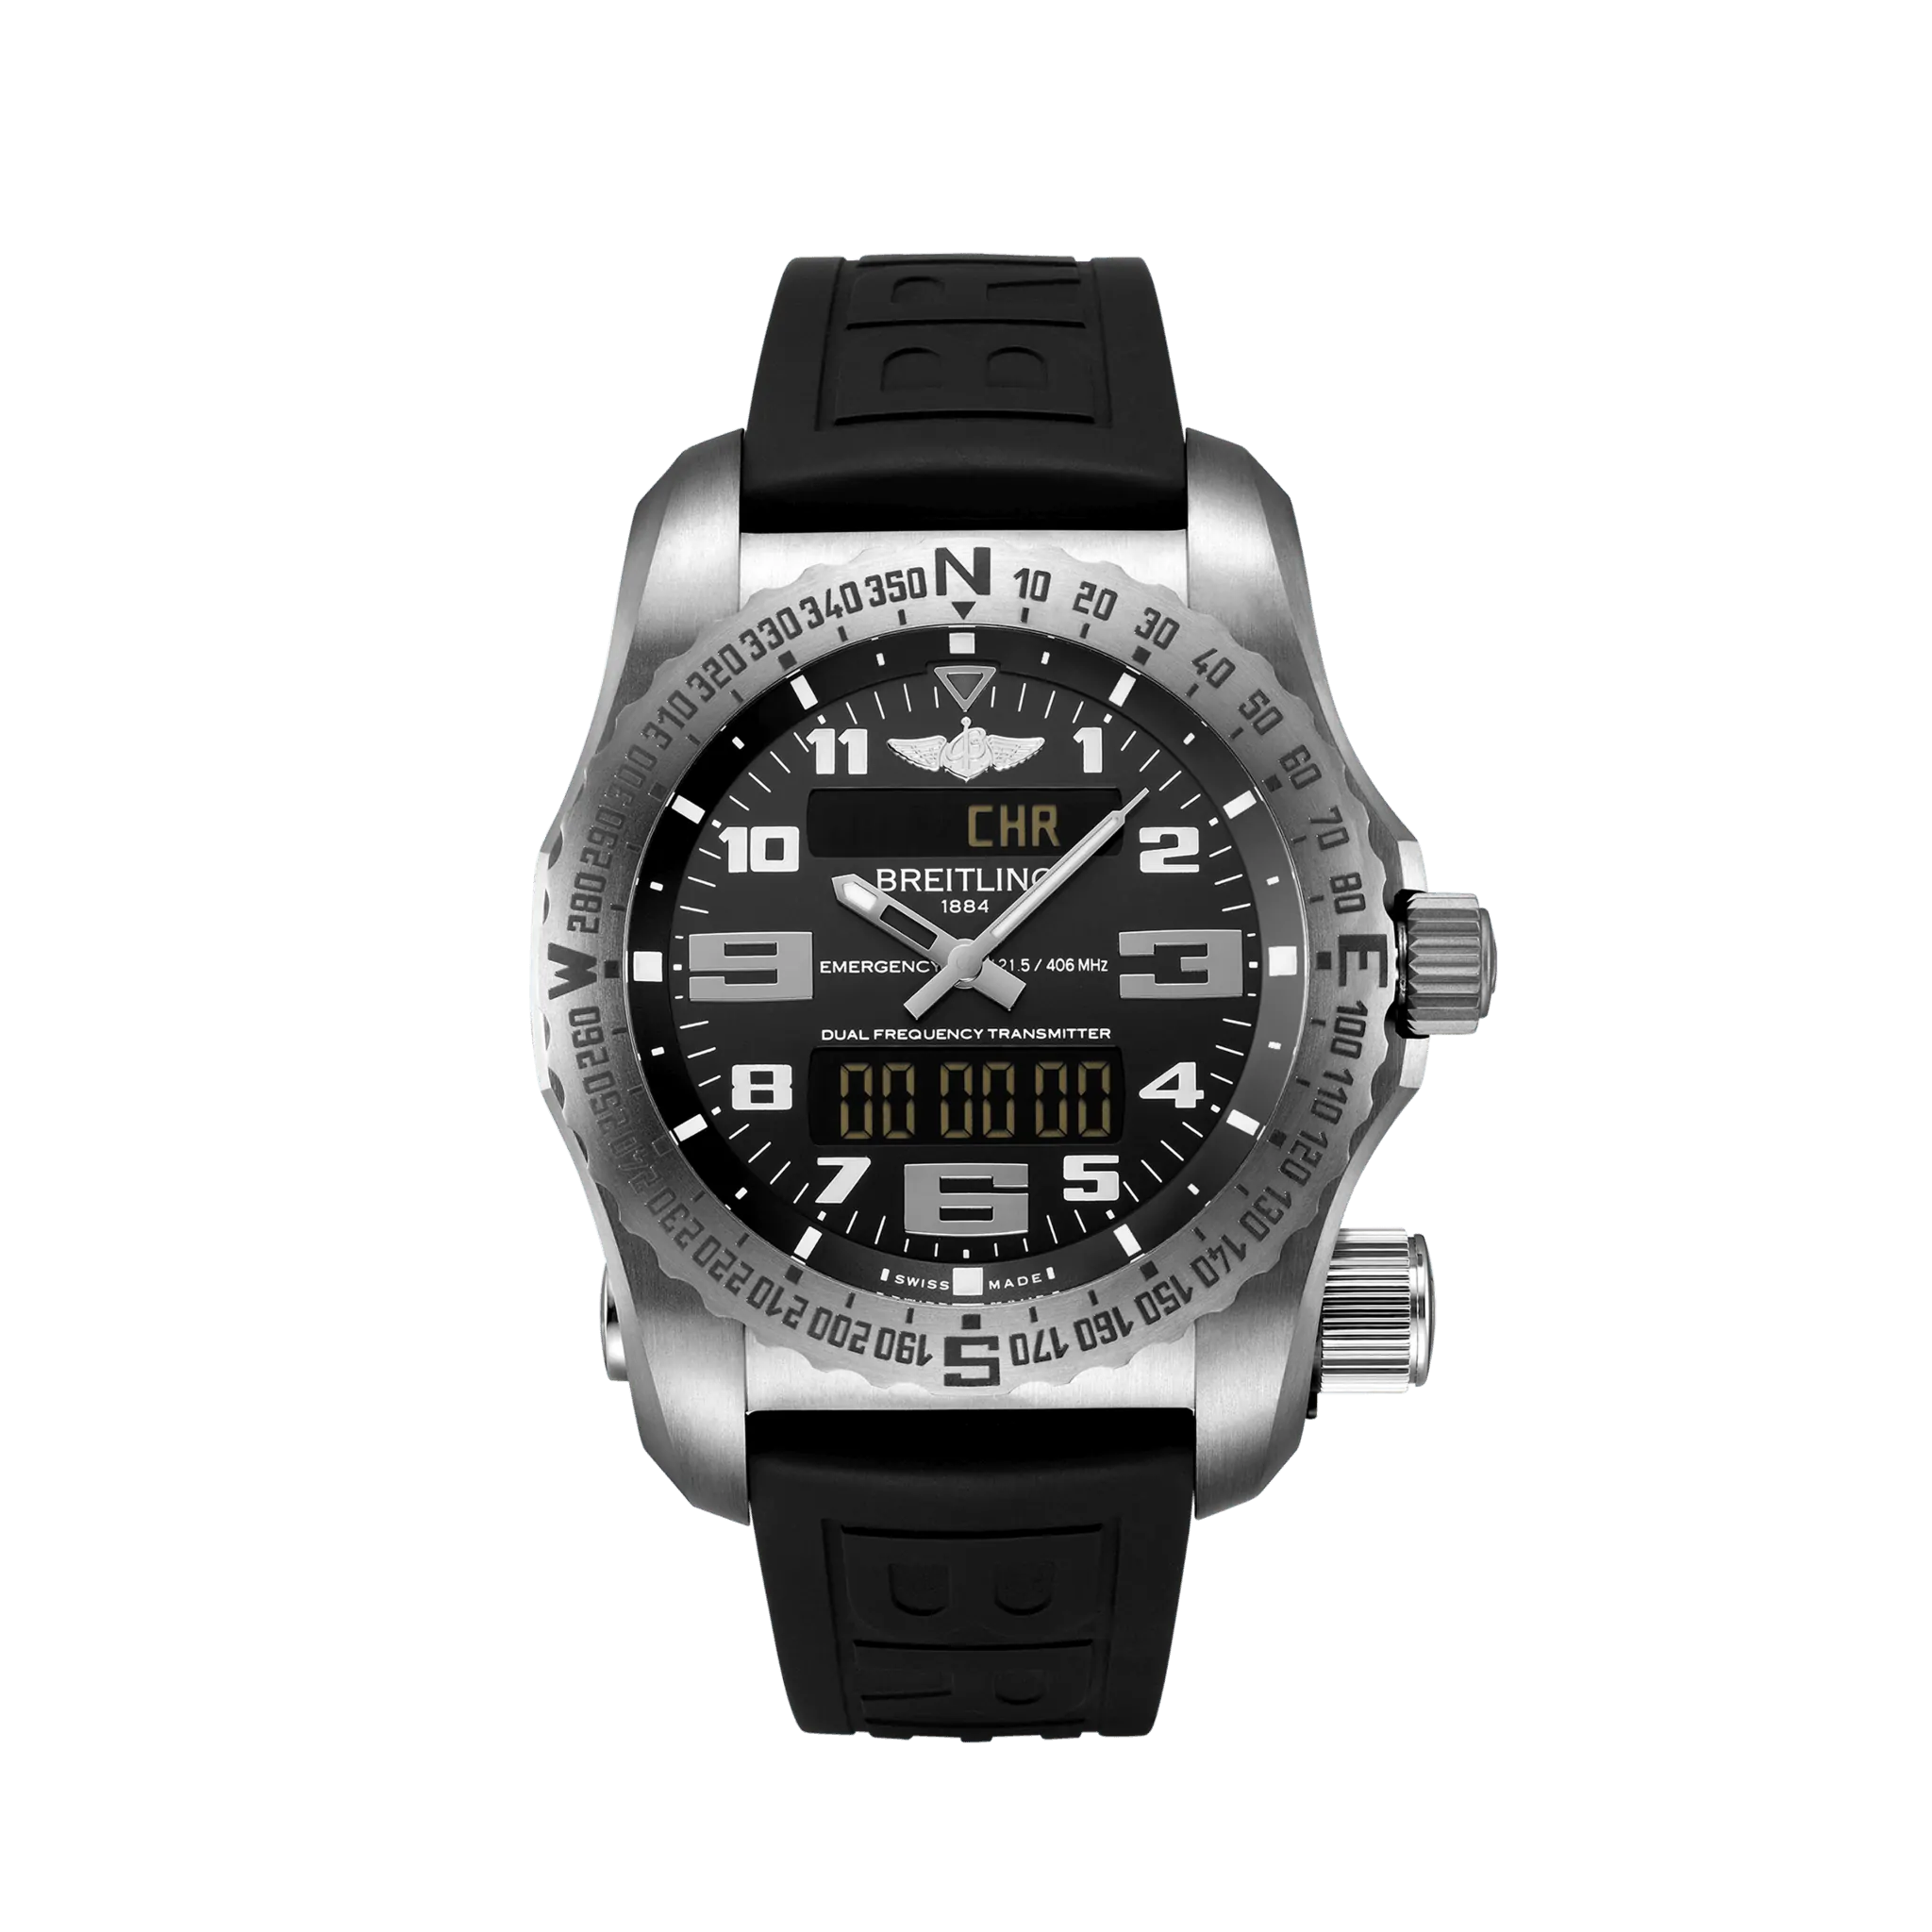 Breitling Professional Emergency 51 Titanium Men's Watch